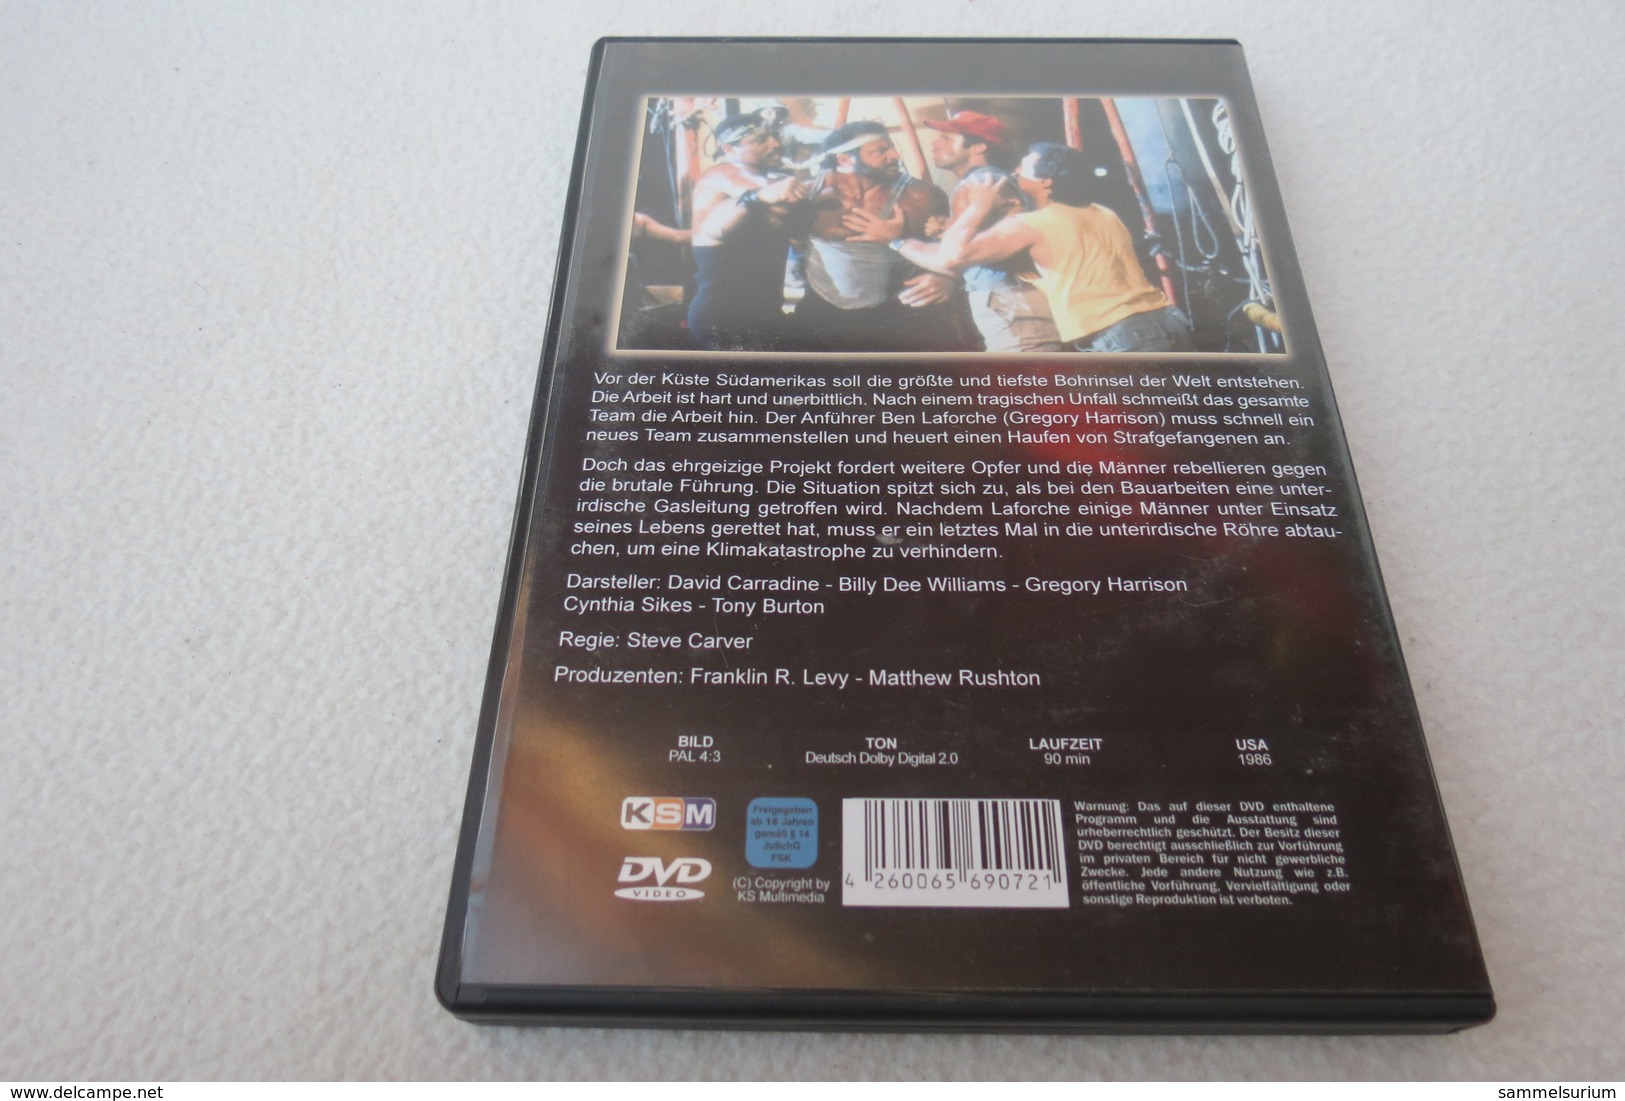 DVD "Verwegene Hunde" David Carradine, Gregory Harrison, Billy Dee Williams - Music On DVD